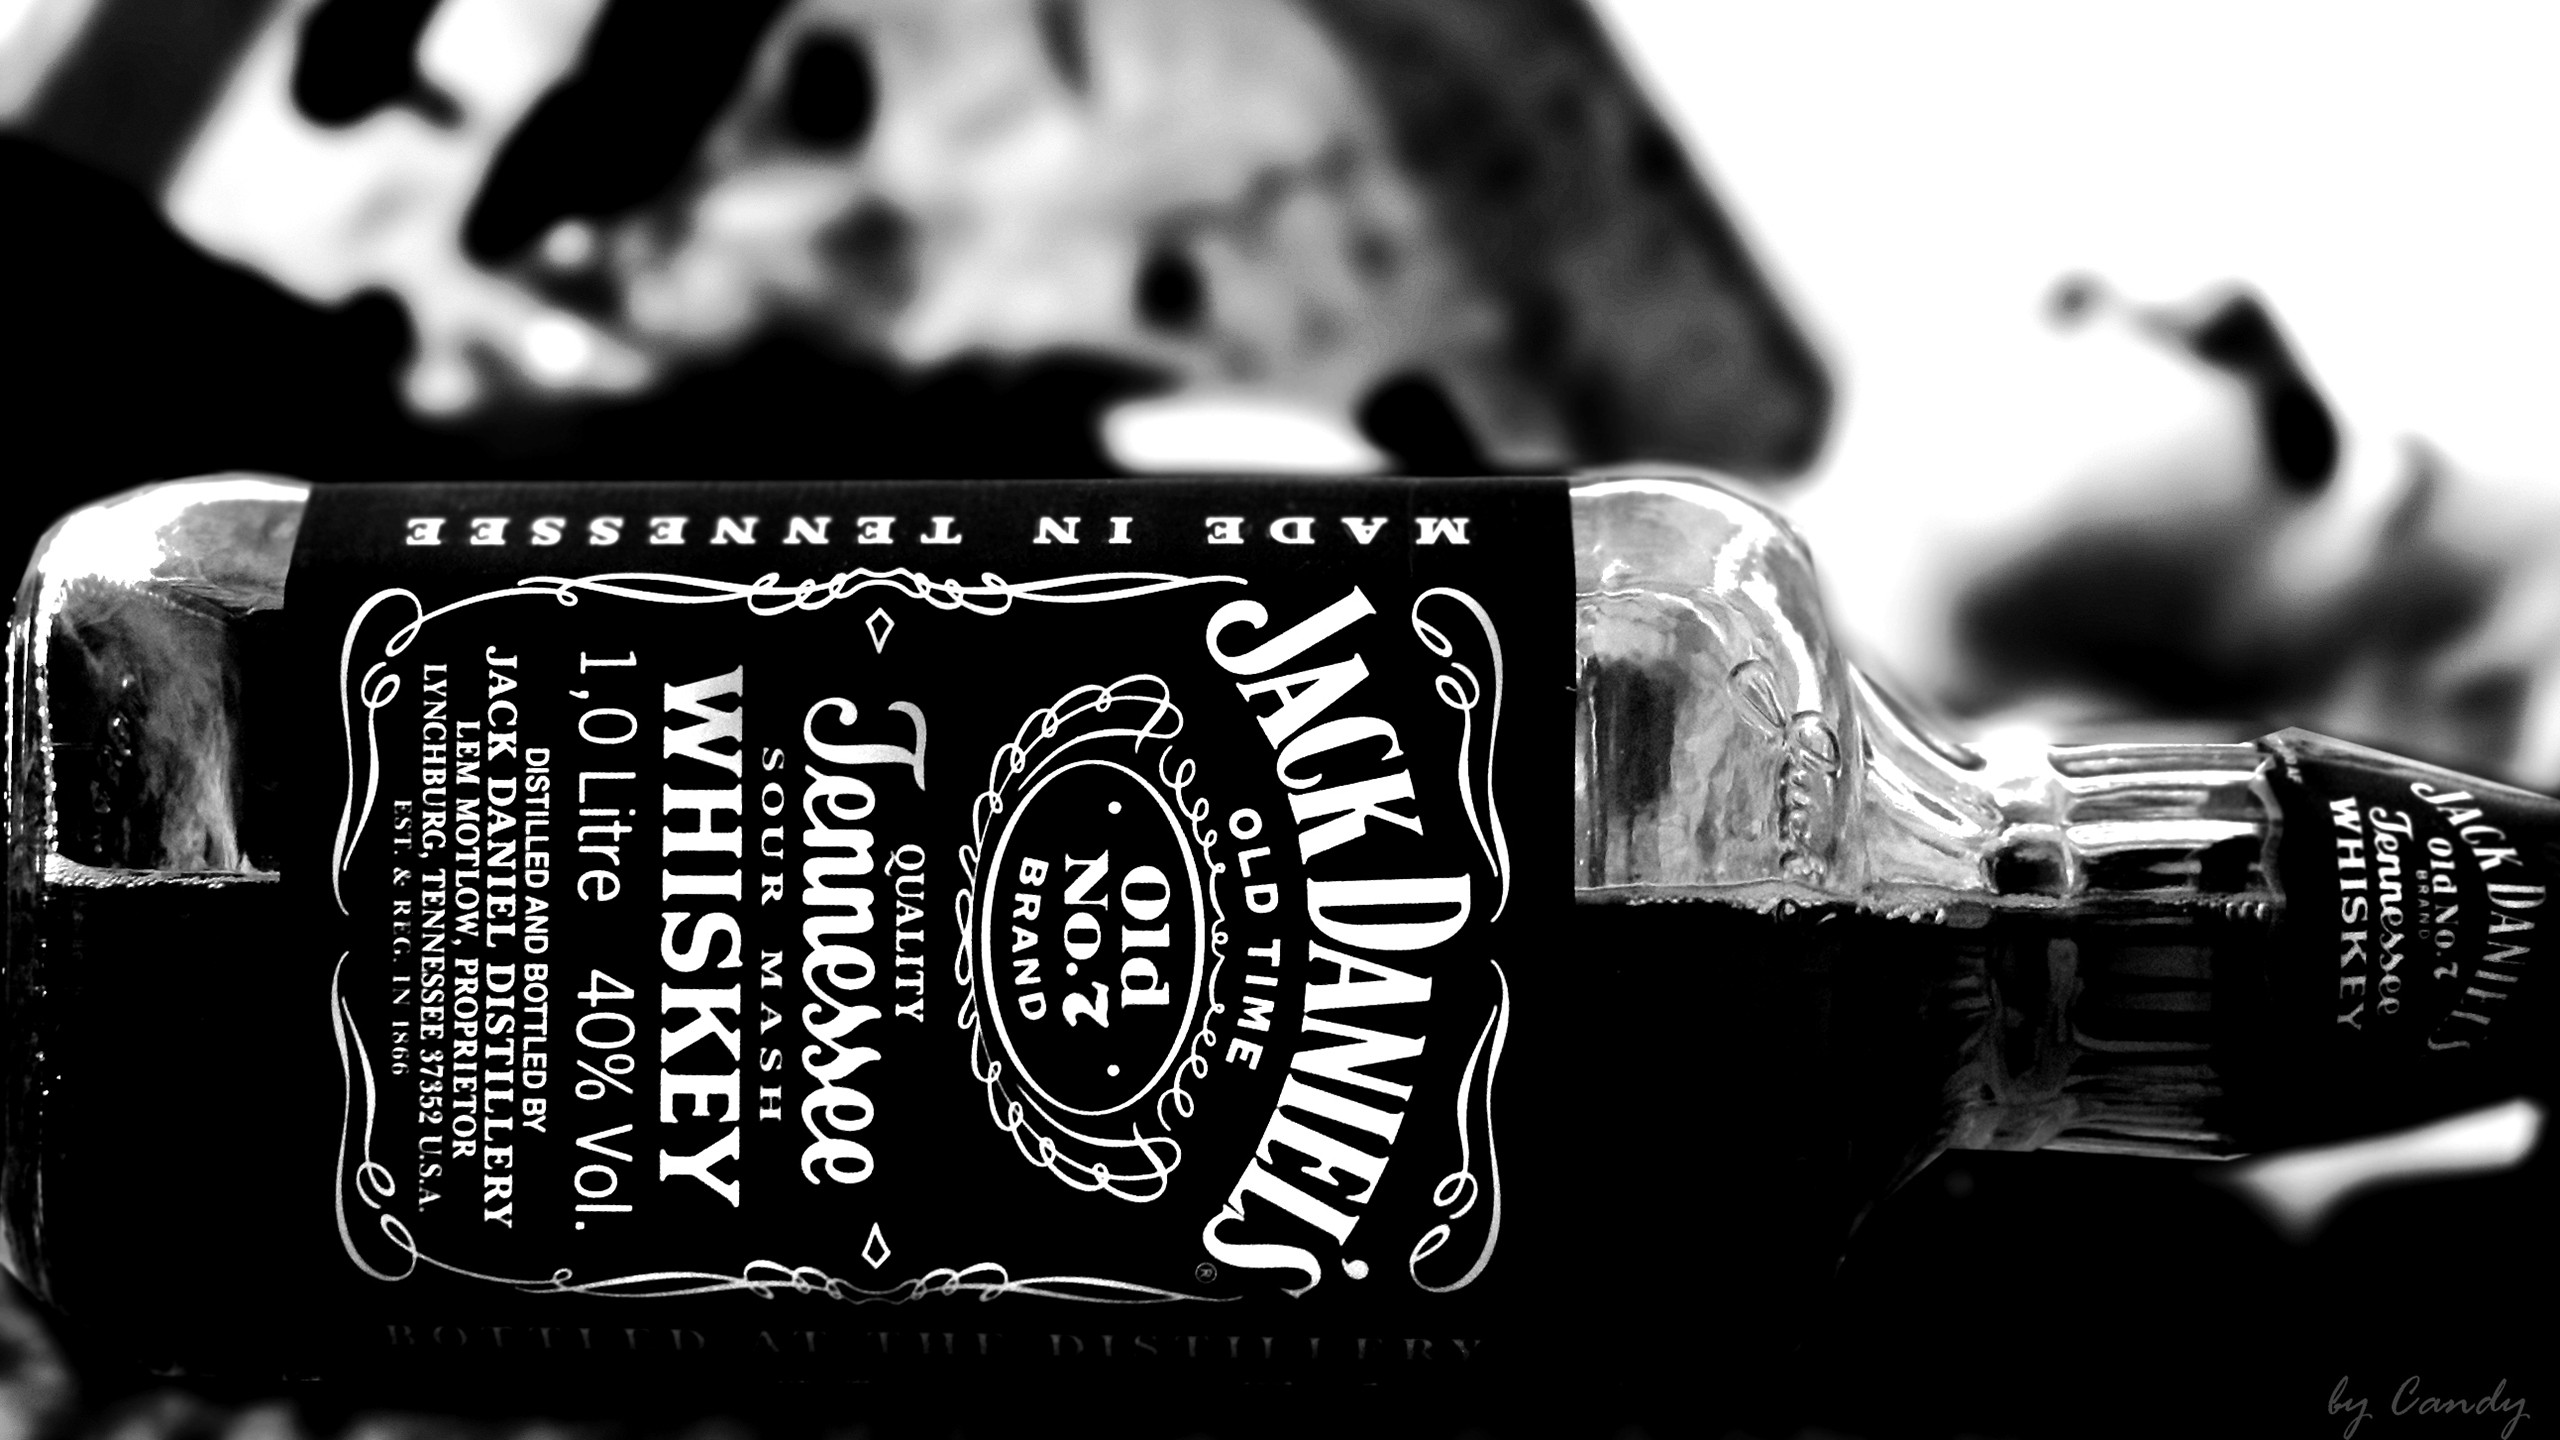 General 2560x1440 Jack Daniel's black whiskey monochrome alcohol brand closeup bottles numbers